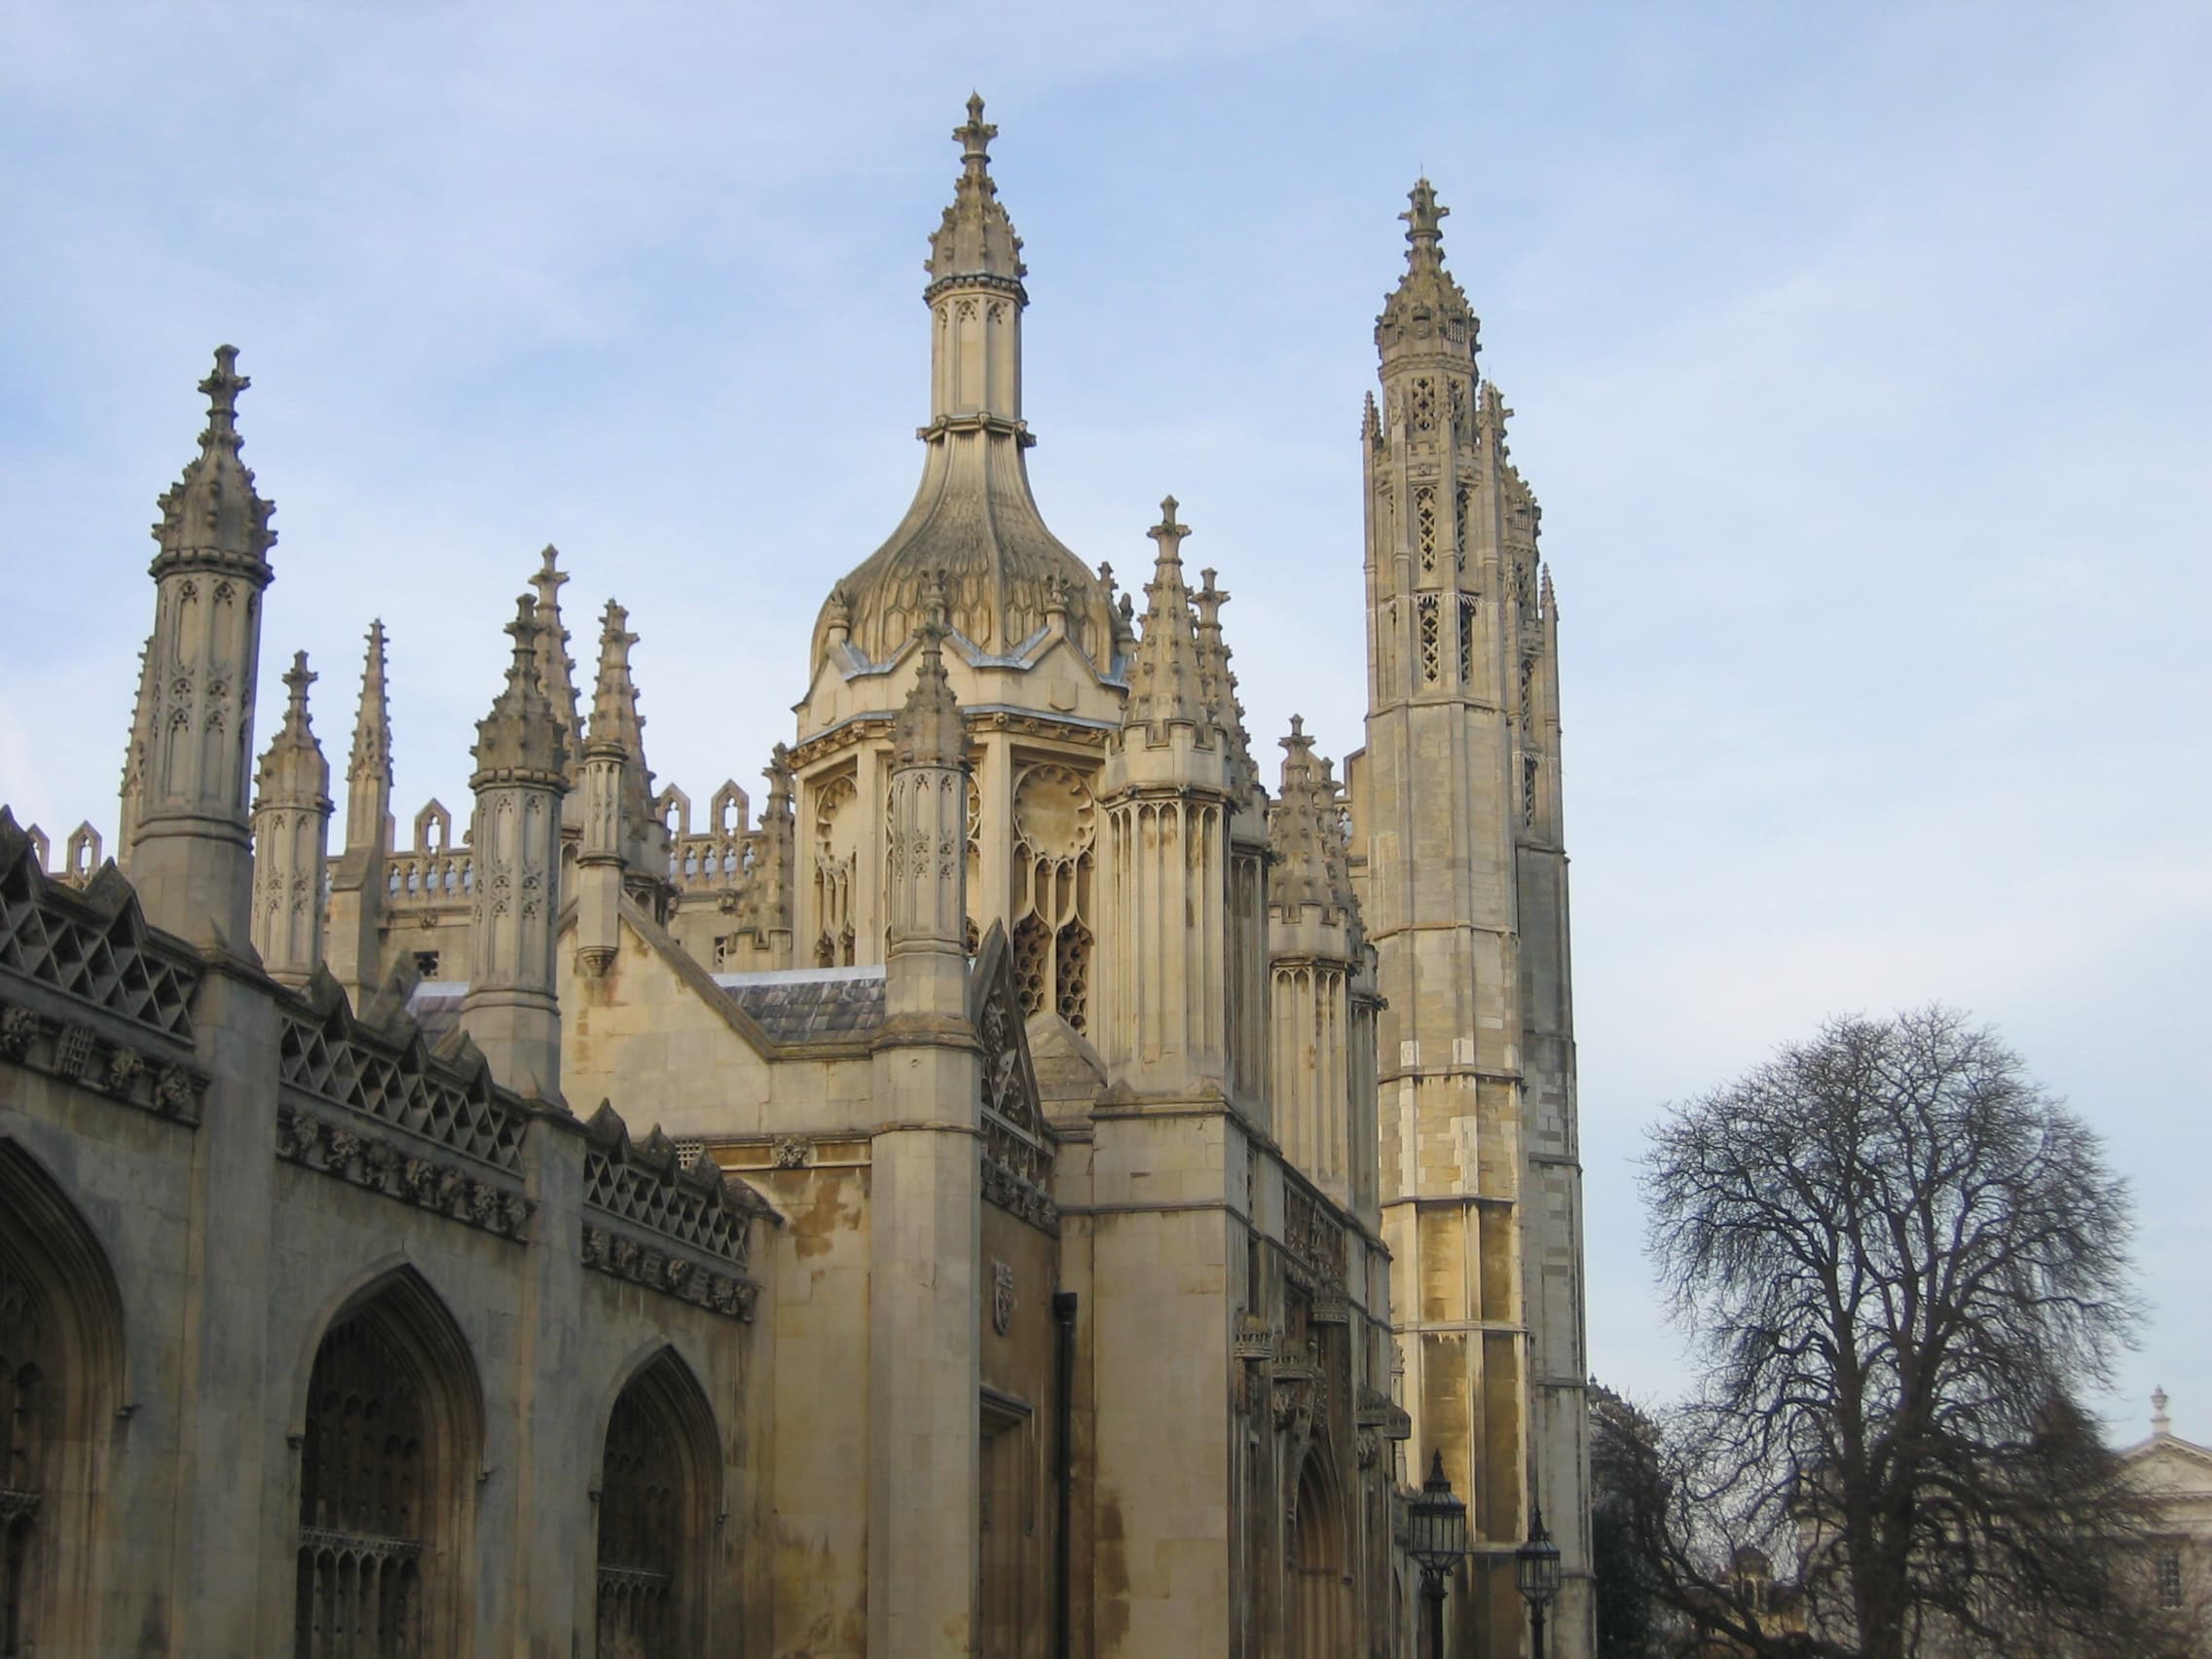 Day Trip to Cambridge